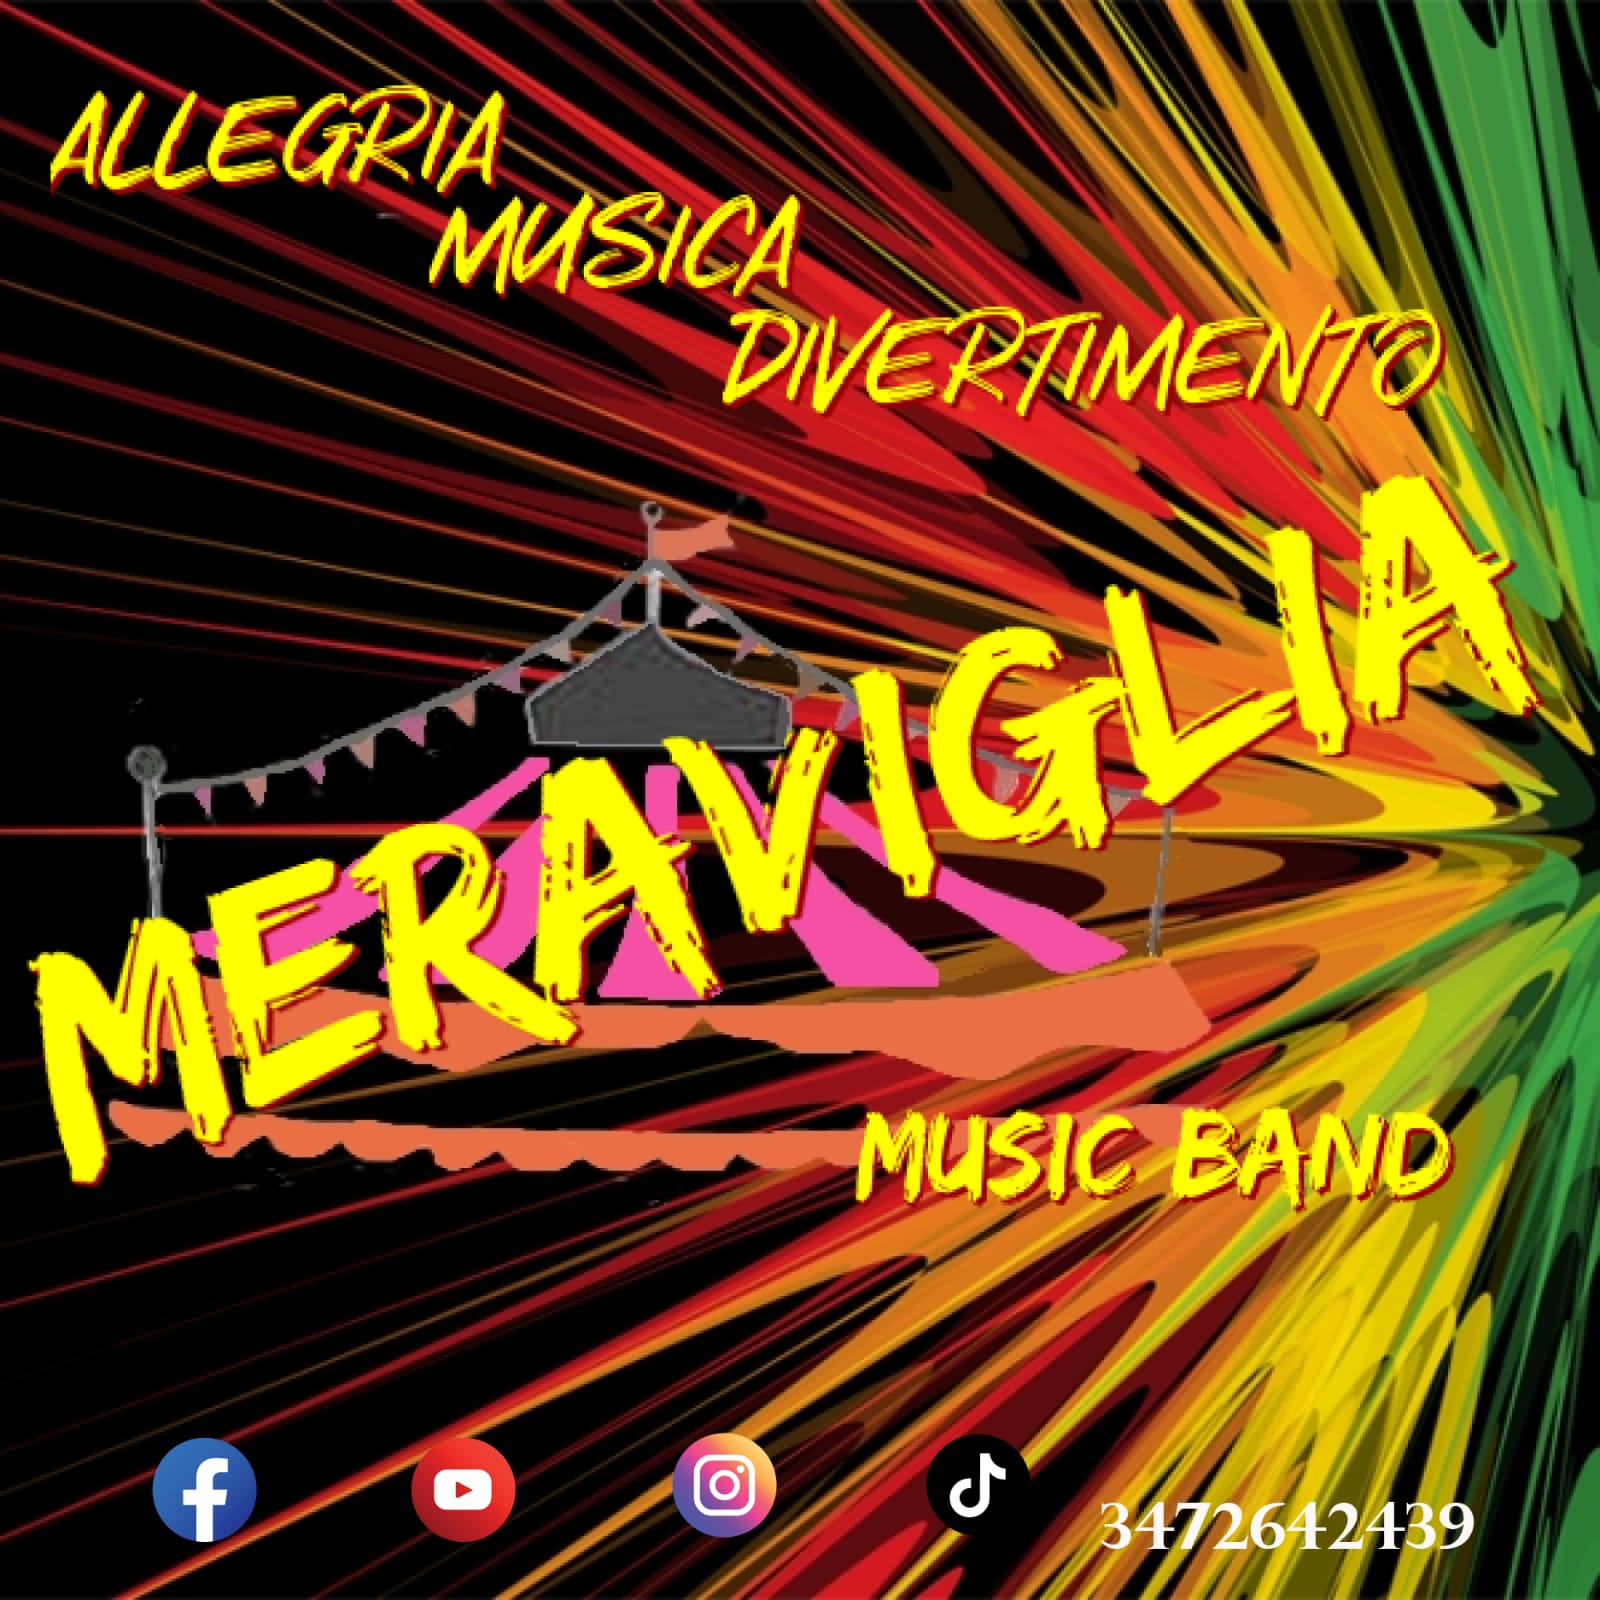 Meraviglia Music Band